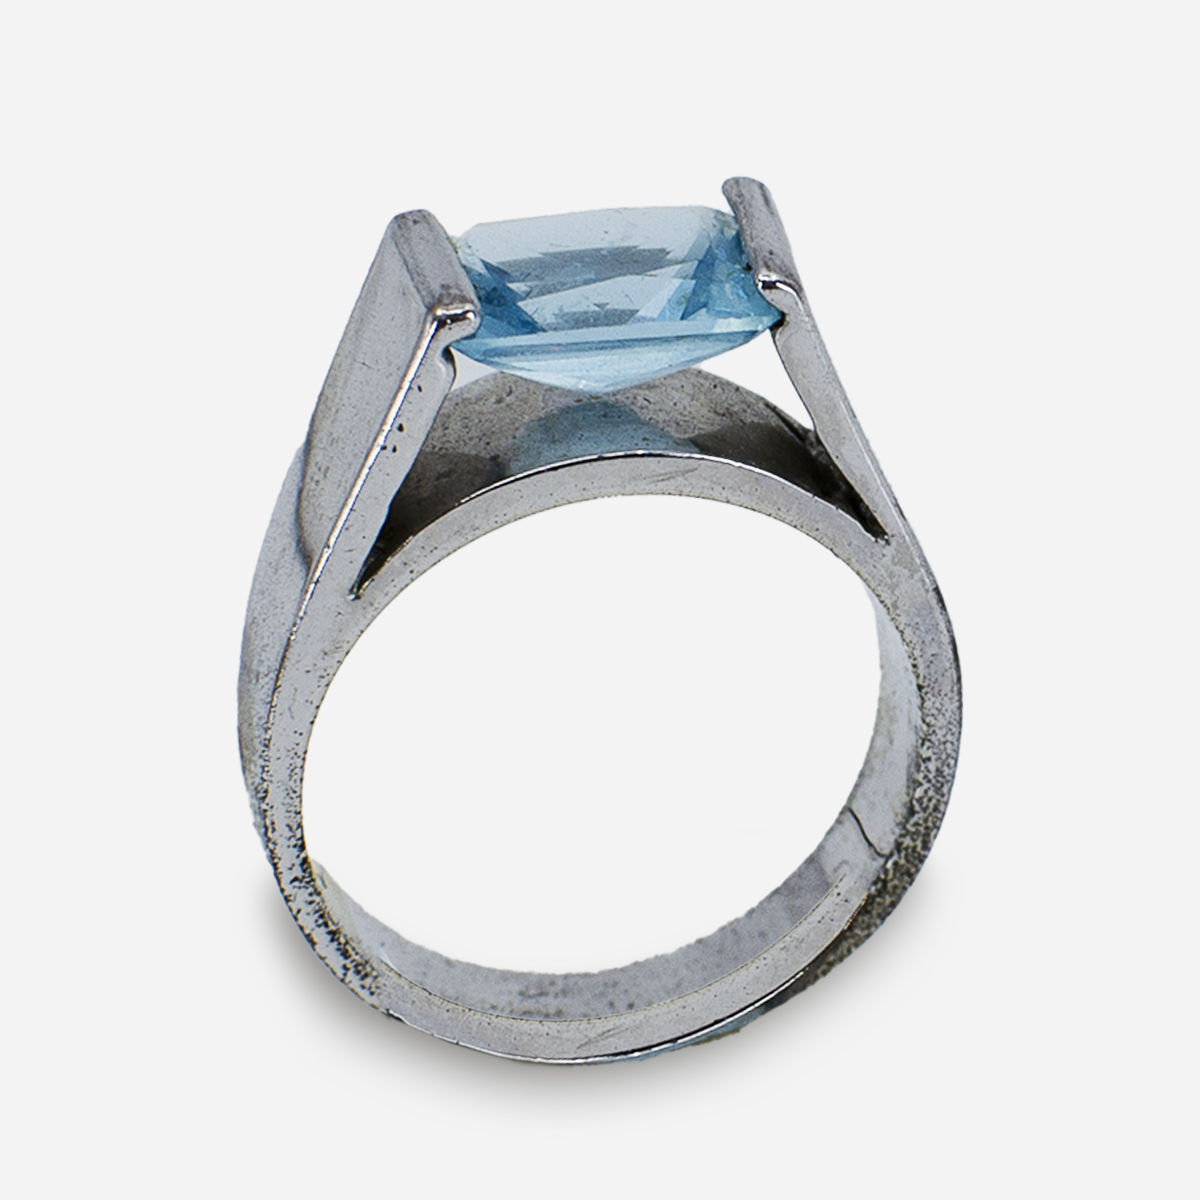 Blue crystal modernist ring copy